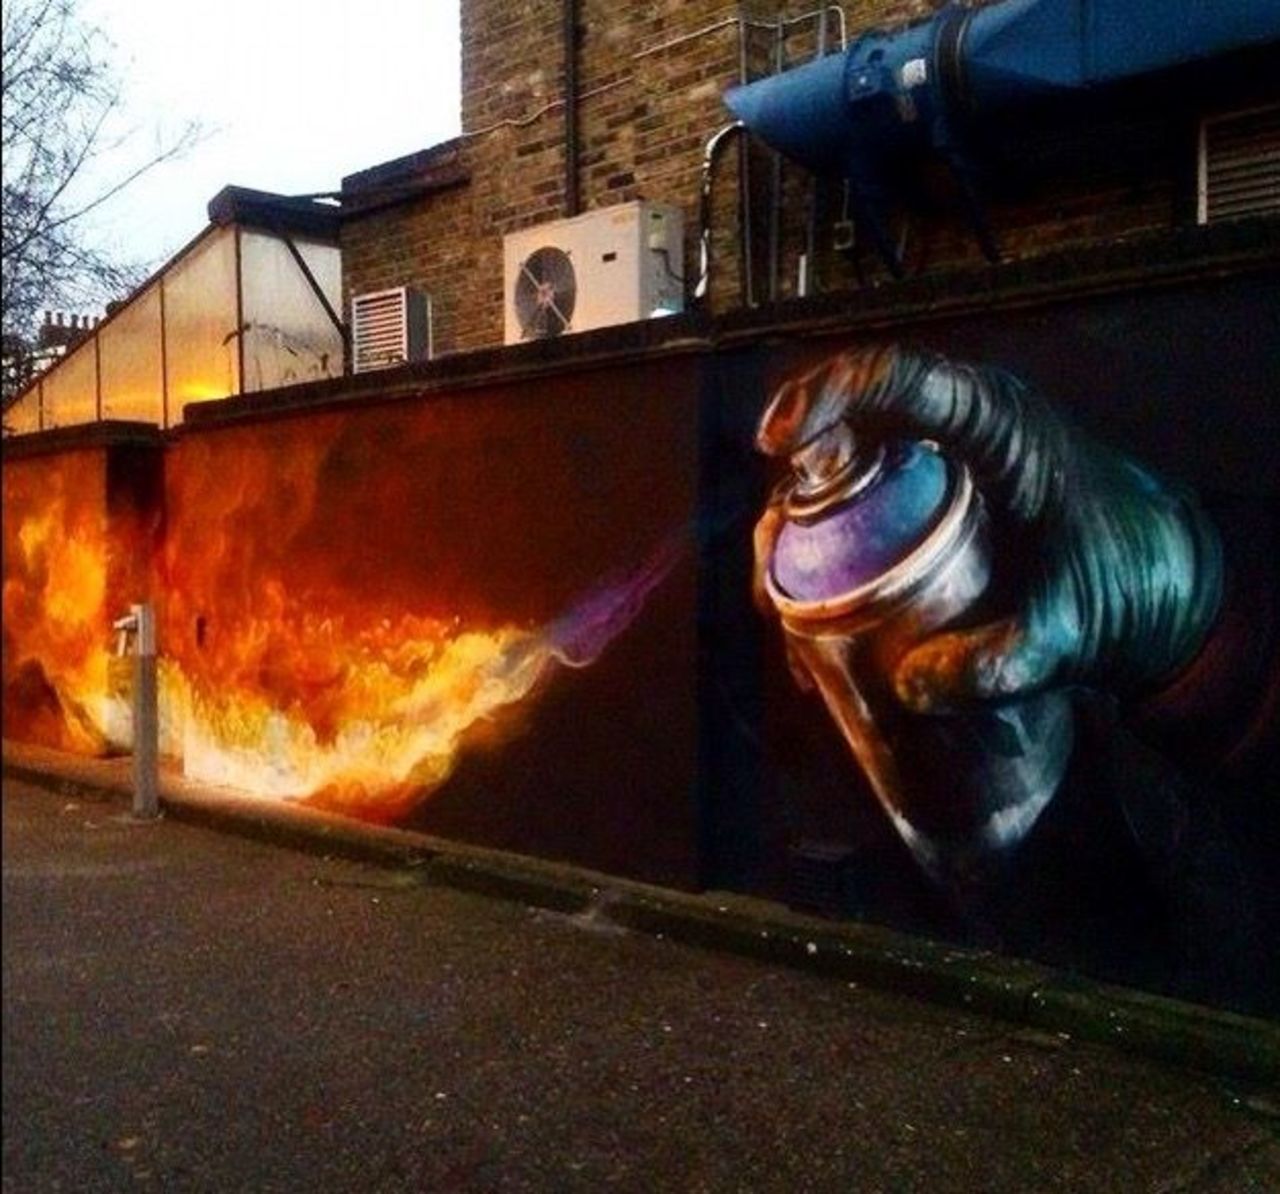 Irony in Camden, London#streetart #mural #graffiti https://t.co/1G9L6Y38Ne